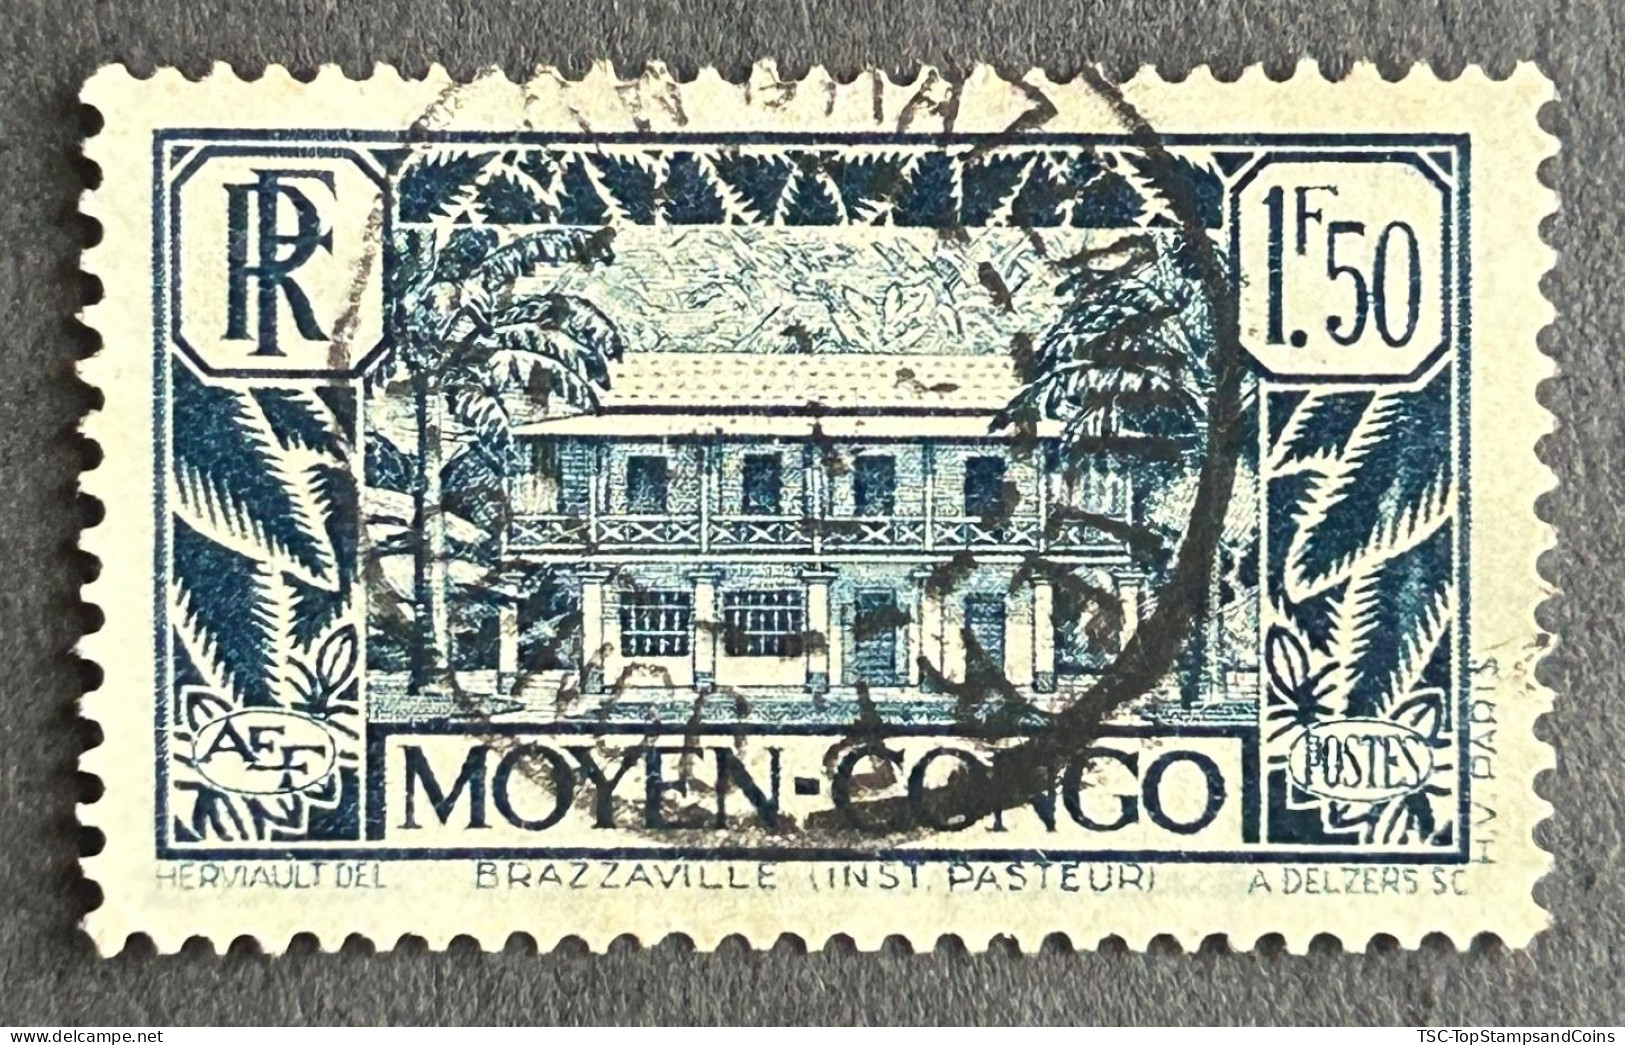 FRCG129U2 - Brazzaville - Pasteur Institute - 1.50 F Used Stamp - Middle Congo - 1933 - Gebruikt